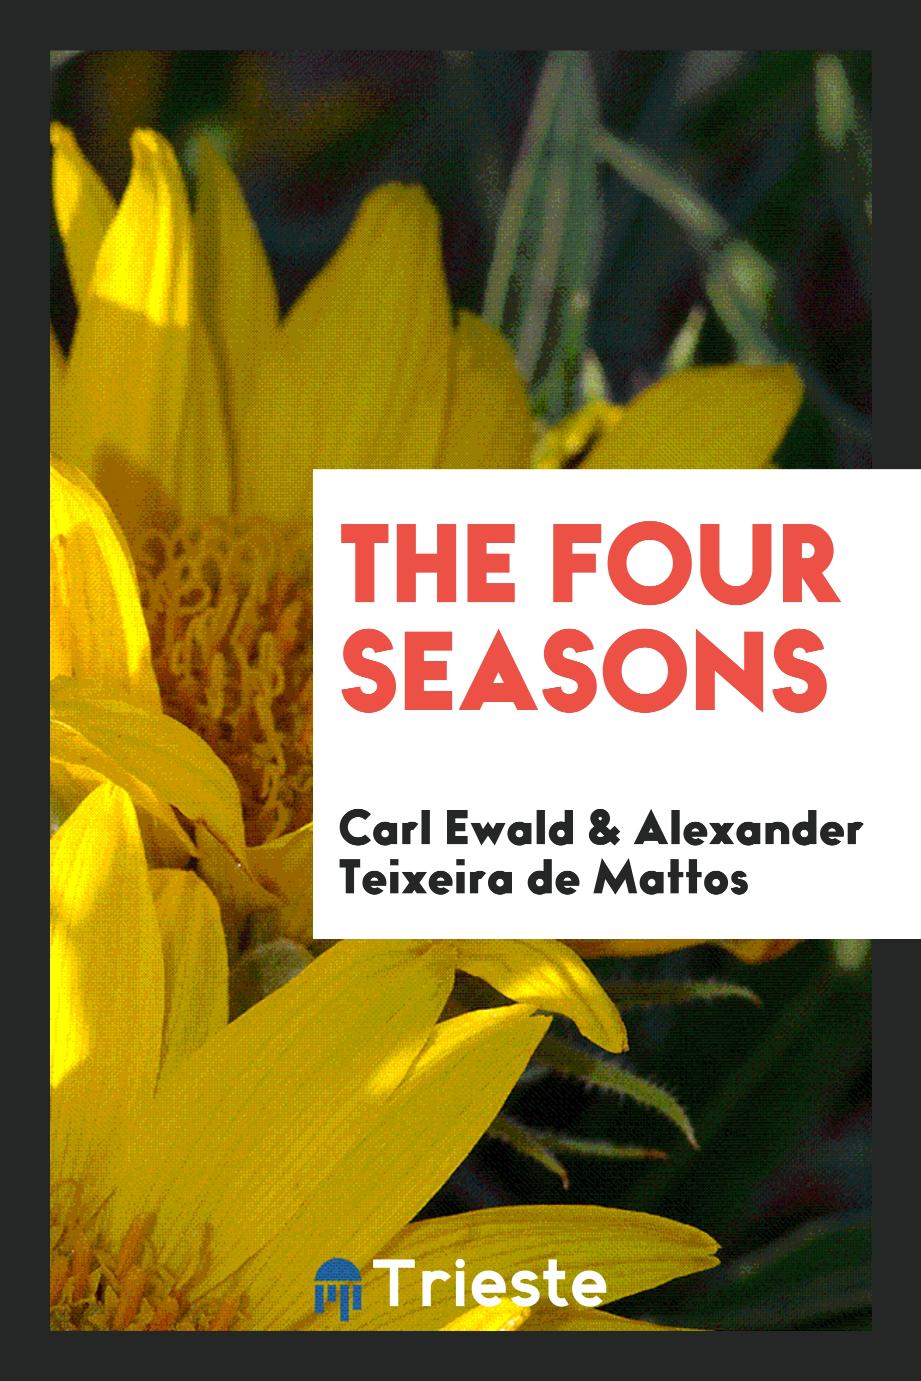 The four seasons